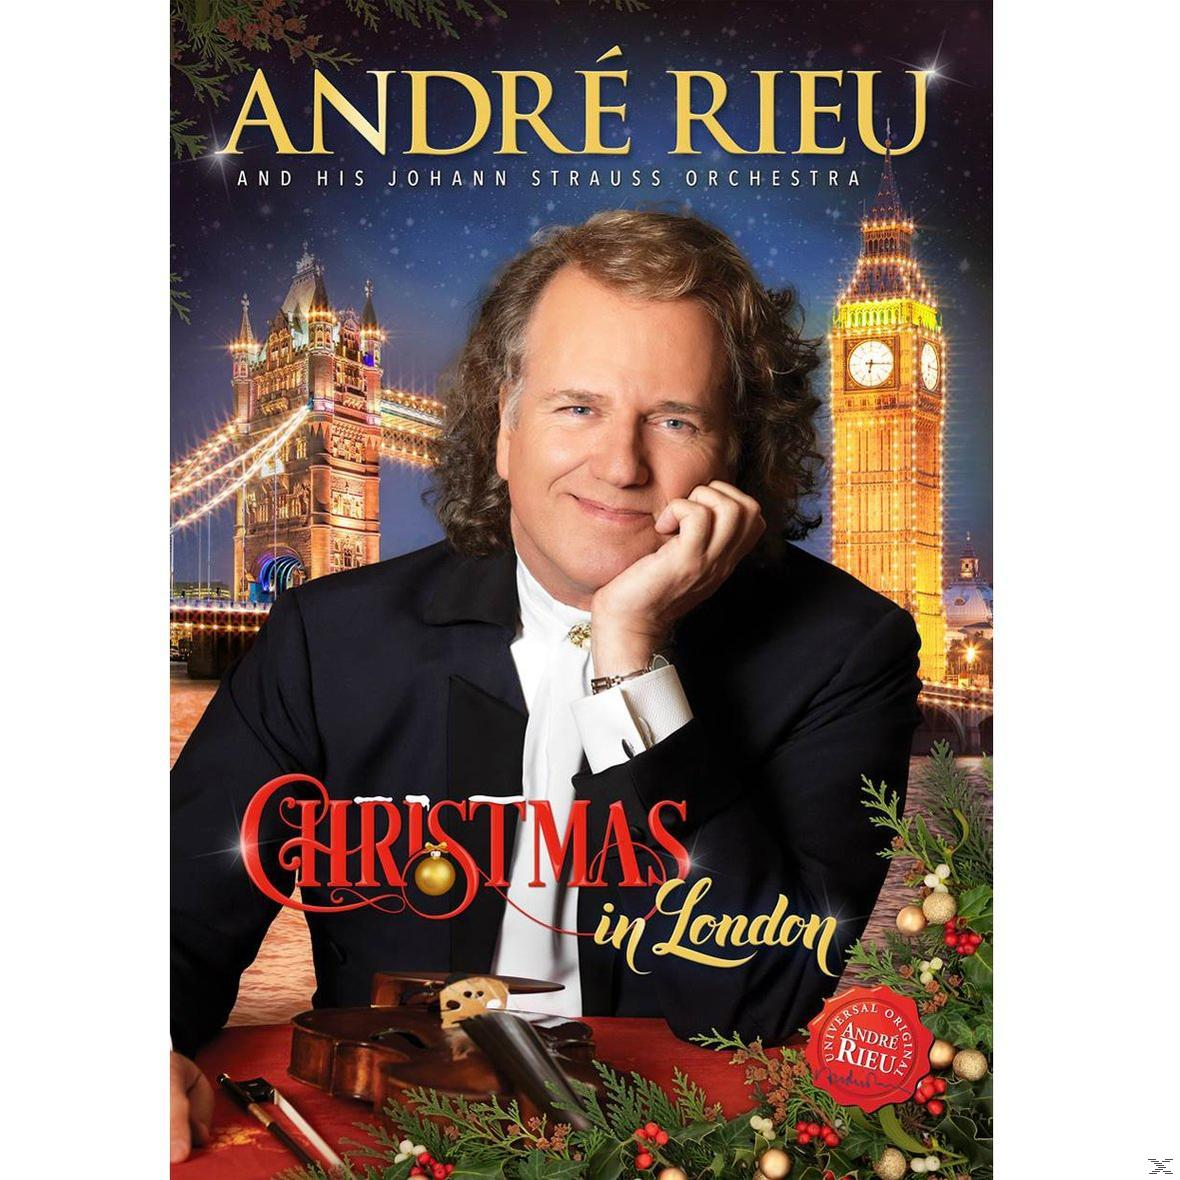 London (Blu-ray) André - In Christmas - Rieu